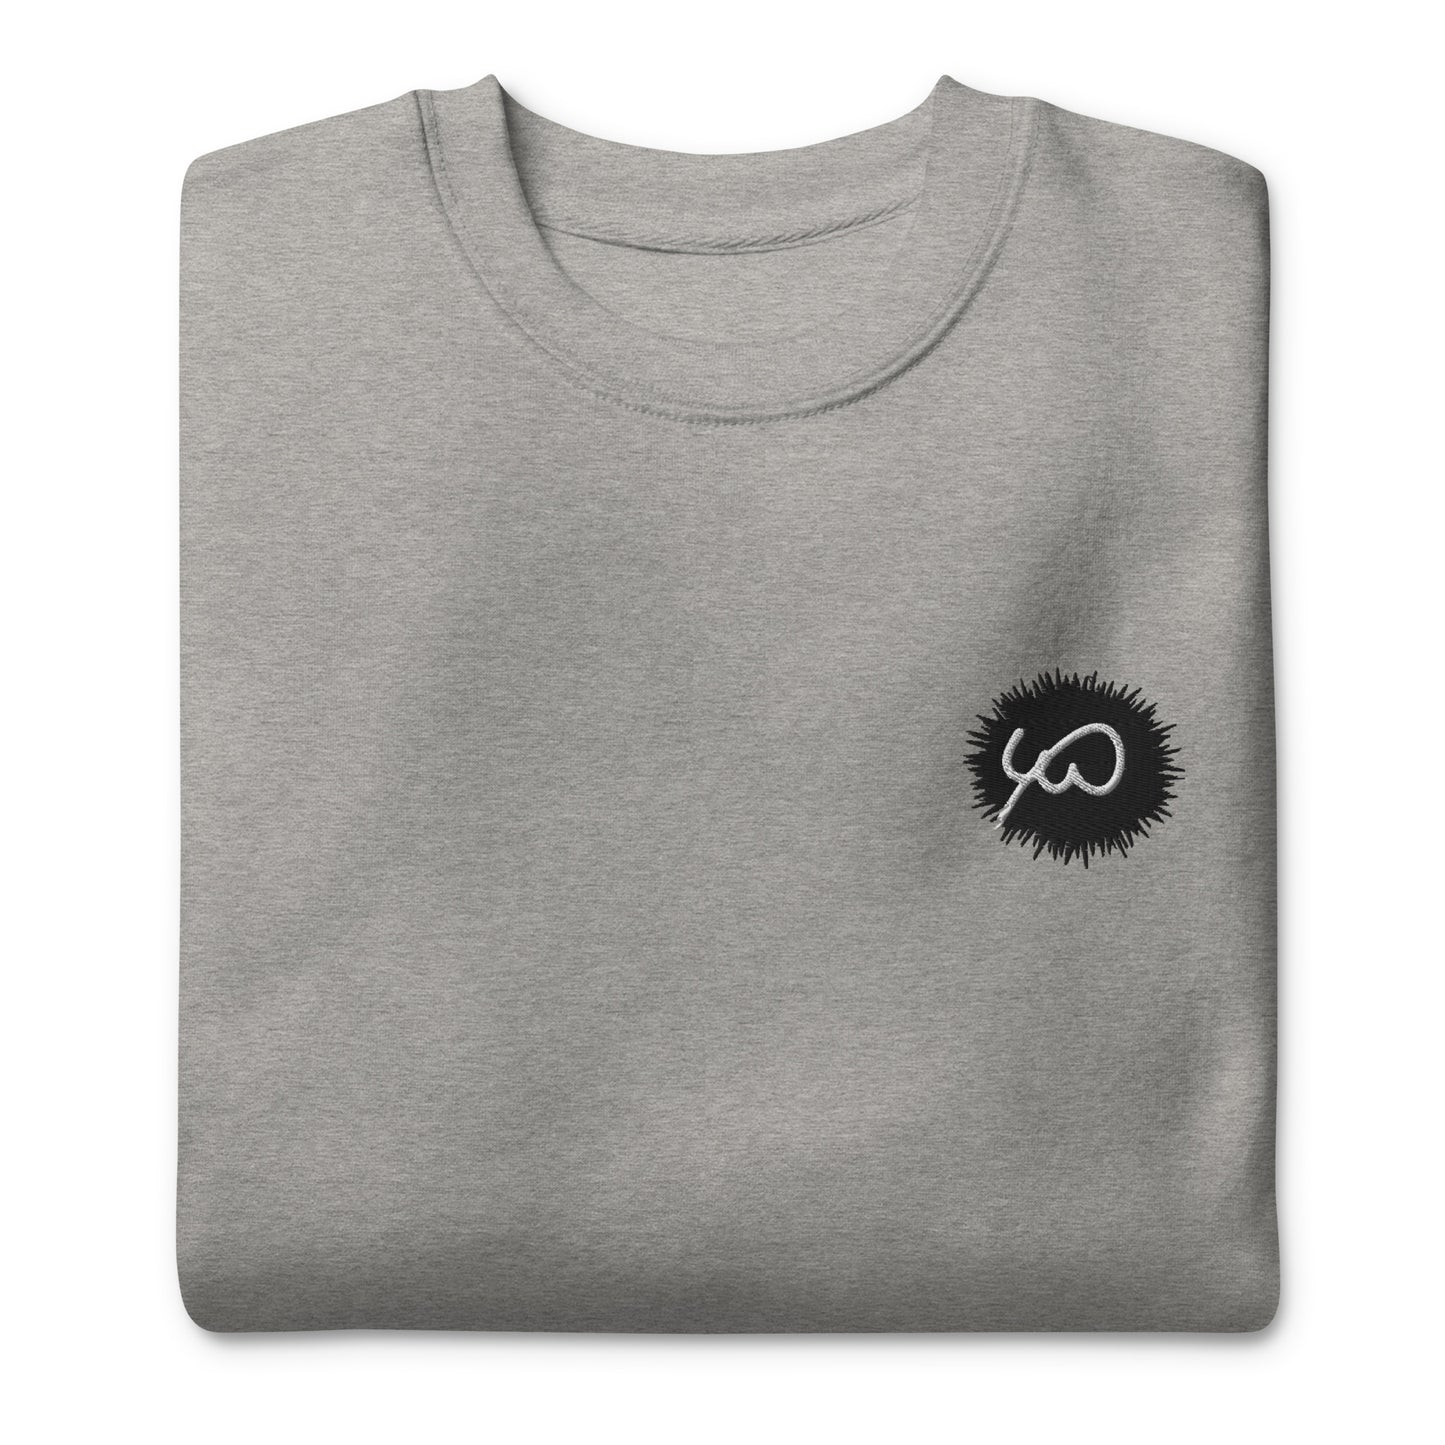 Light Gray Unisex Premium Sweatshirt -Front design with Black and White Embroidery of Uniwari Logo